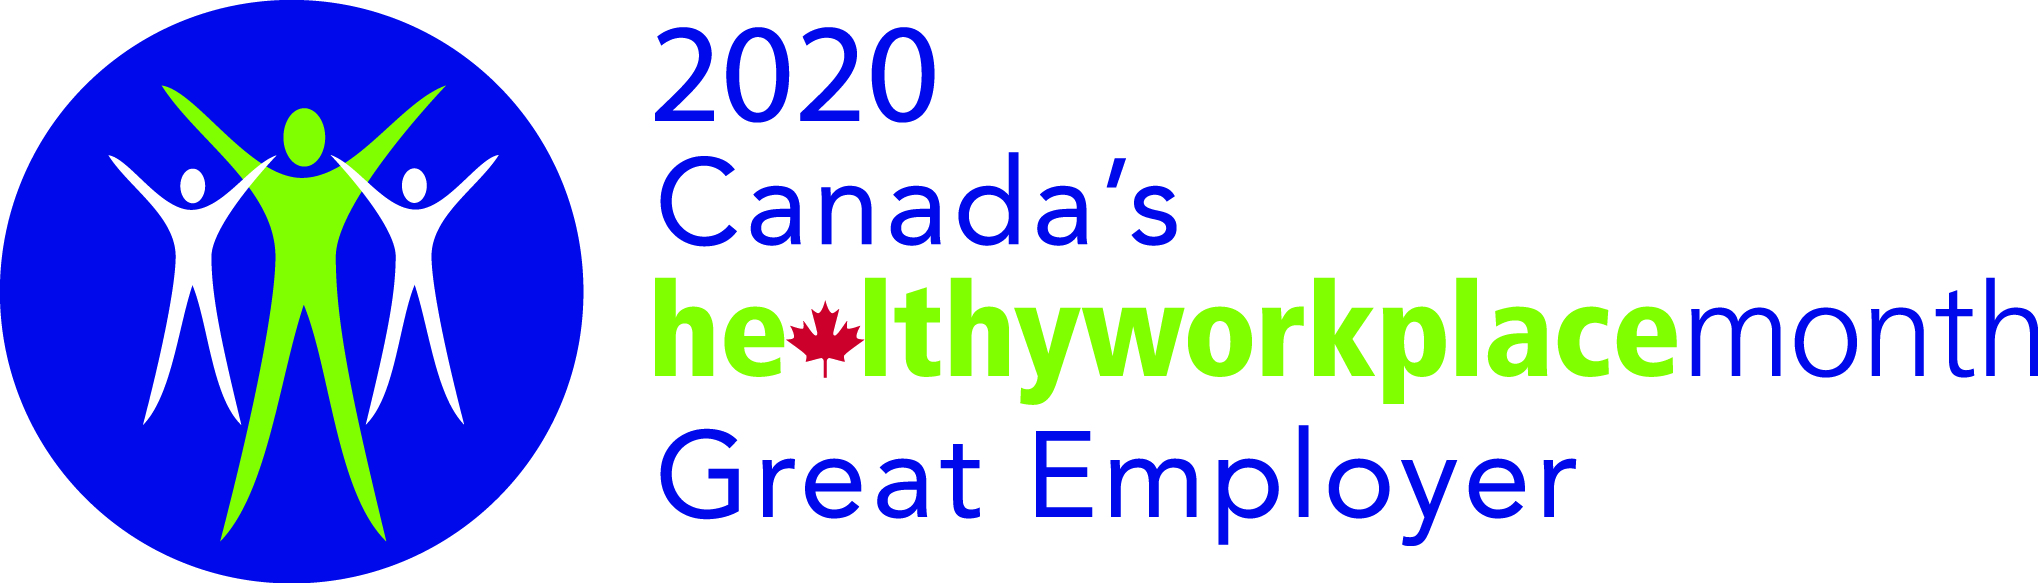 Great Employer logo_2020